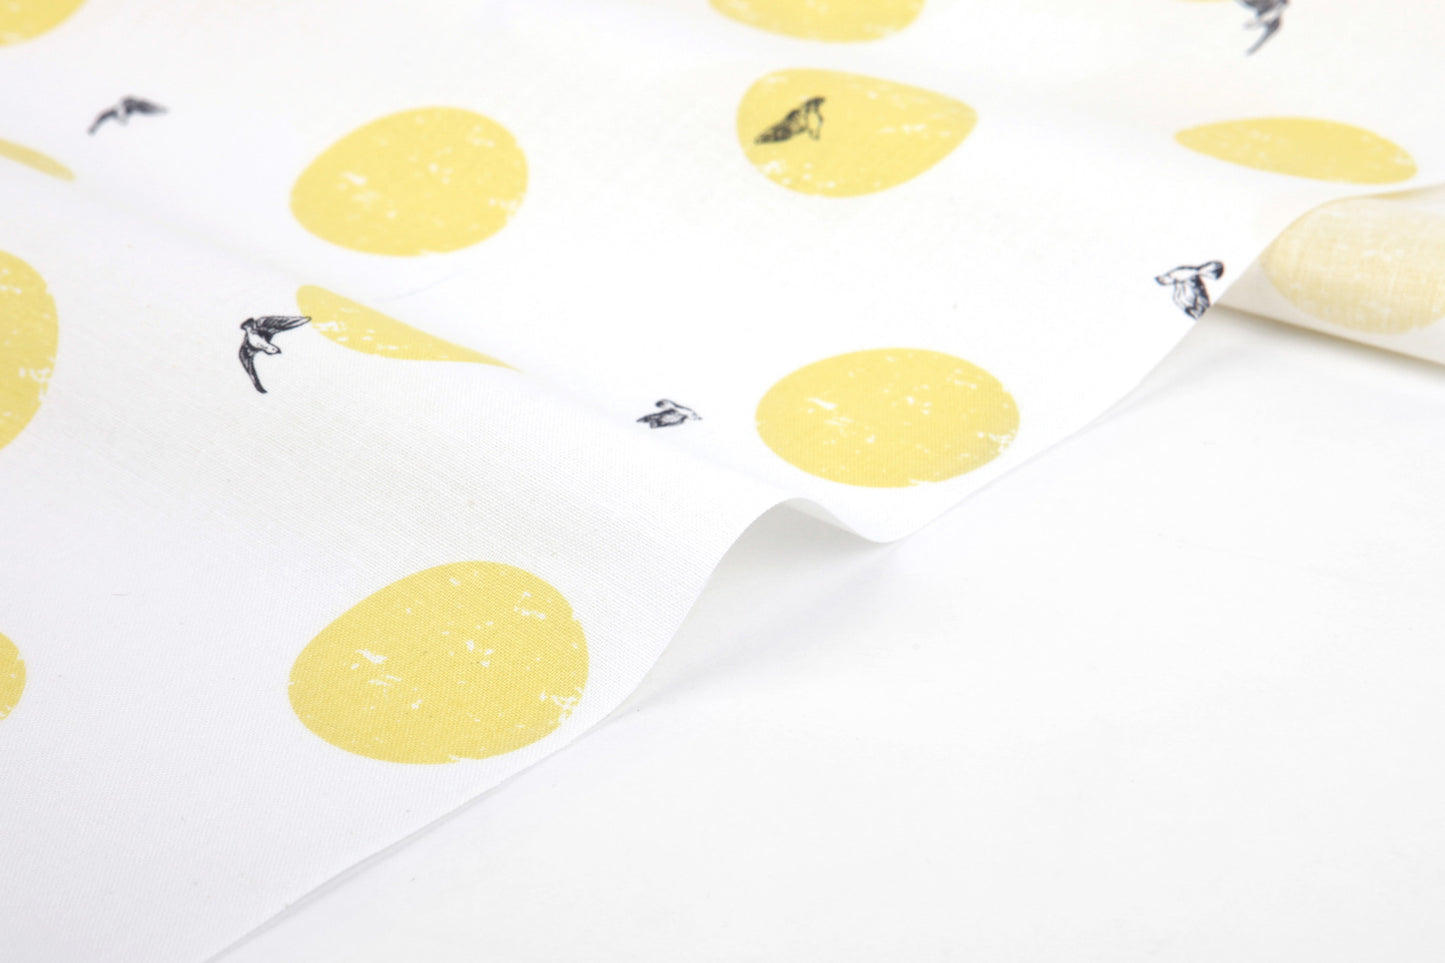 Quarter Fabric Pack - Cotton, Dailylike "Peaceful" - KEY Handmade
 - 2